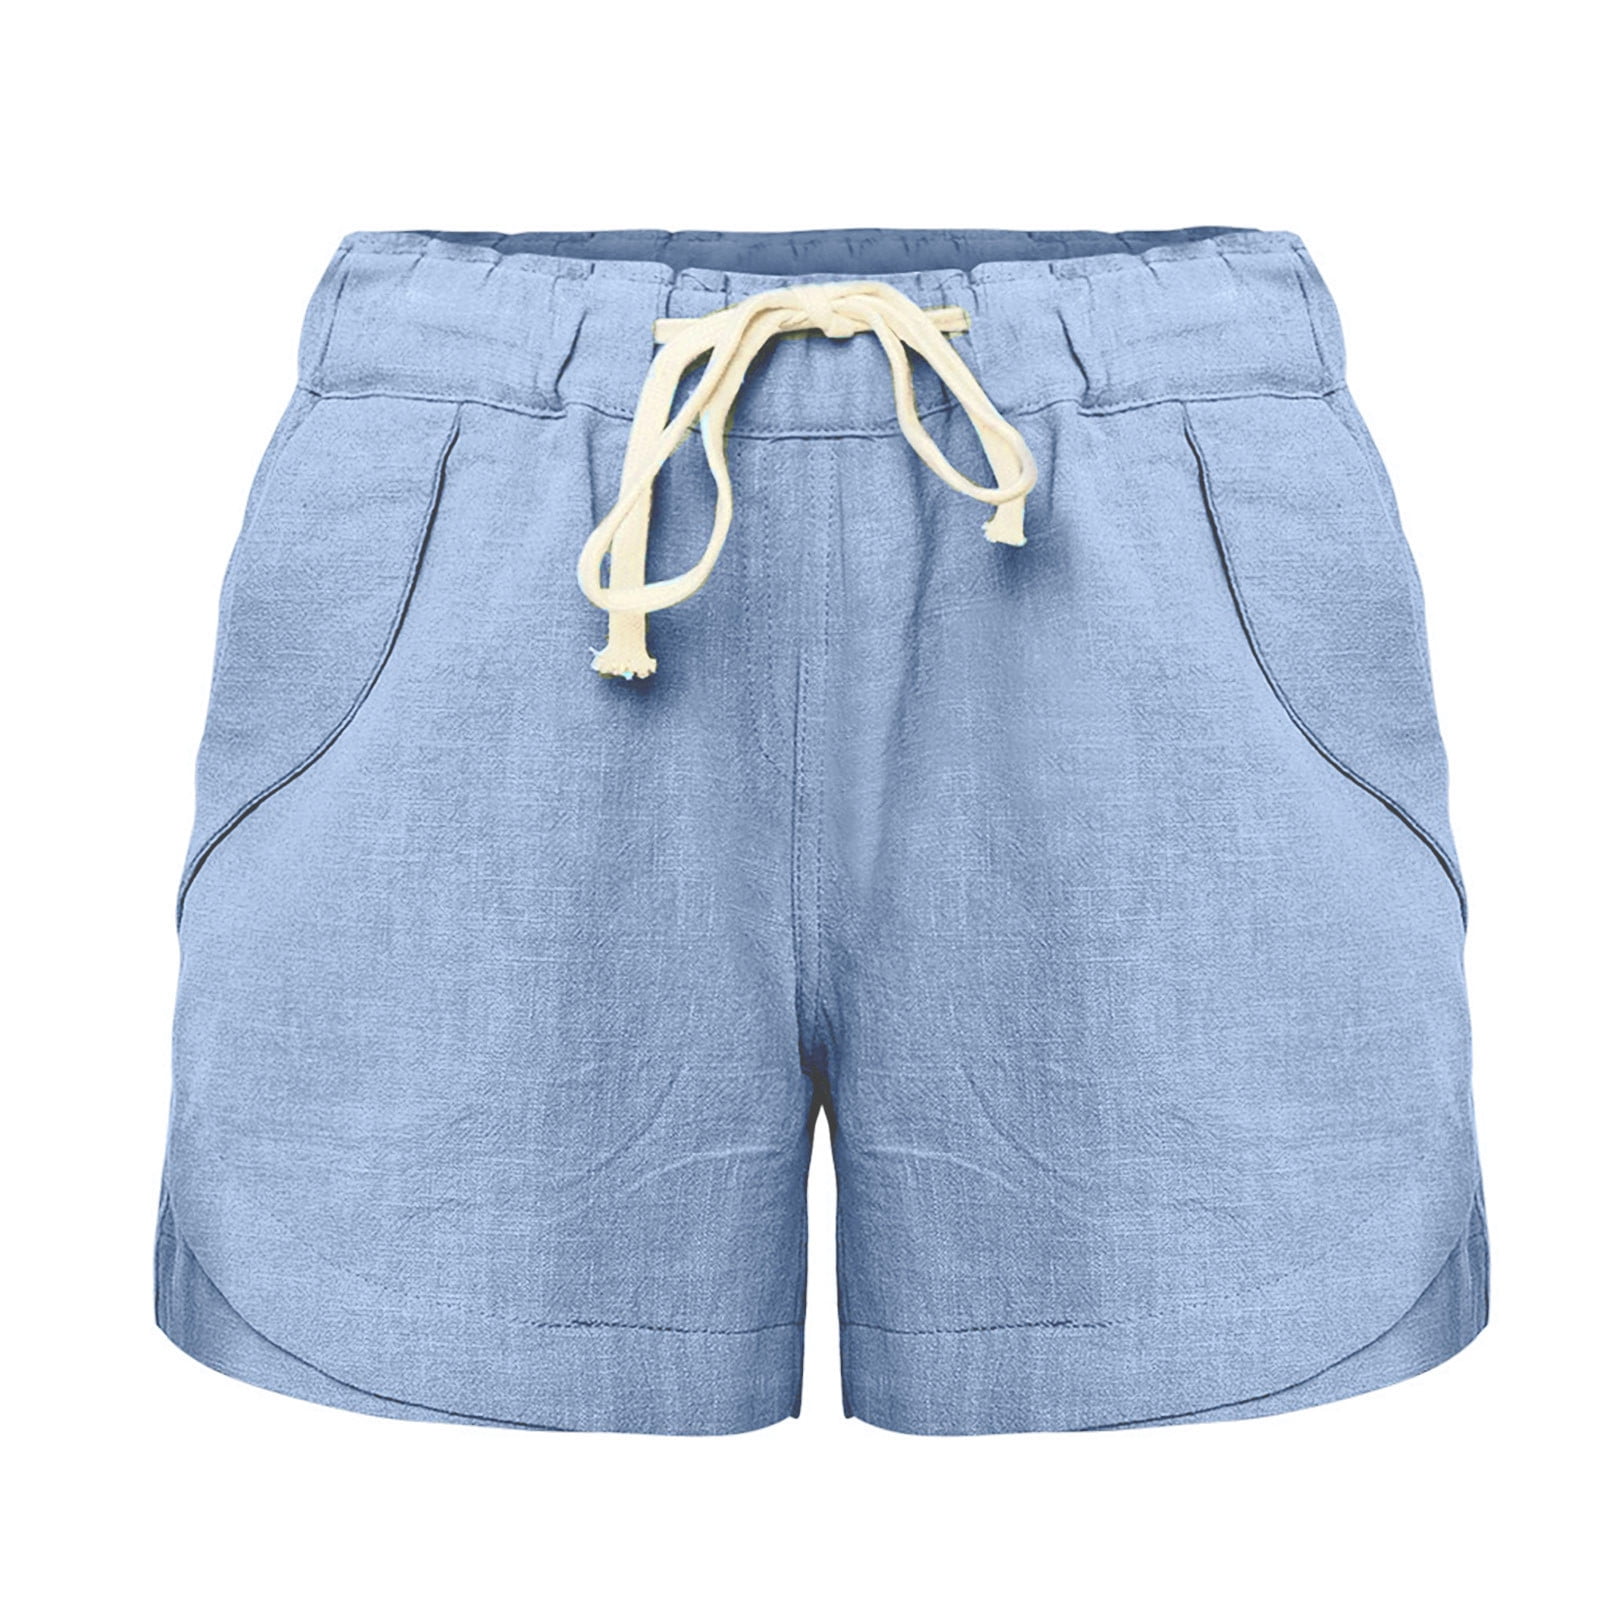 New Summer Fashion,POROPL Plus Size Pockets Elastic Waist Solid